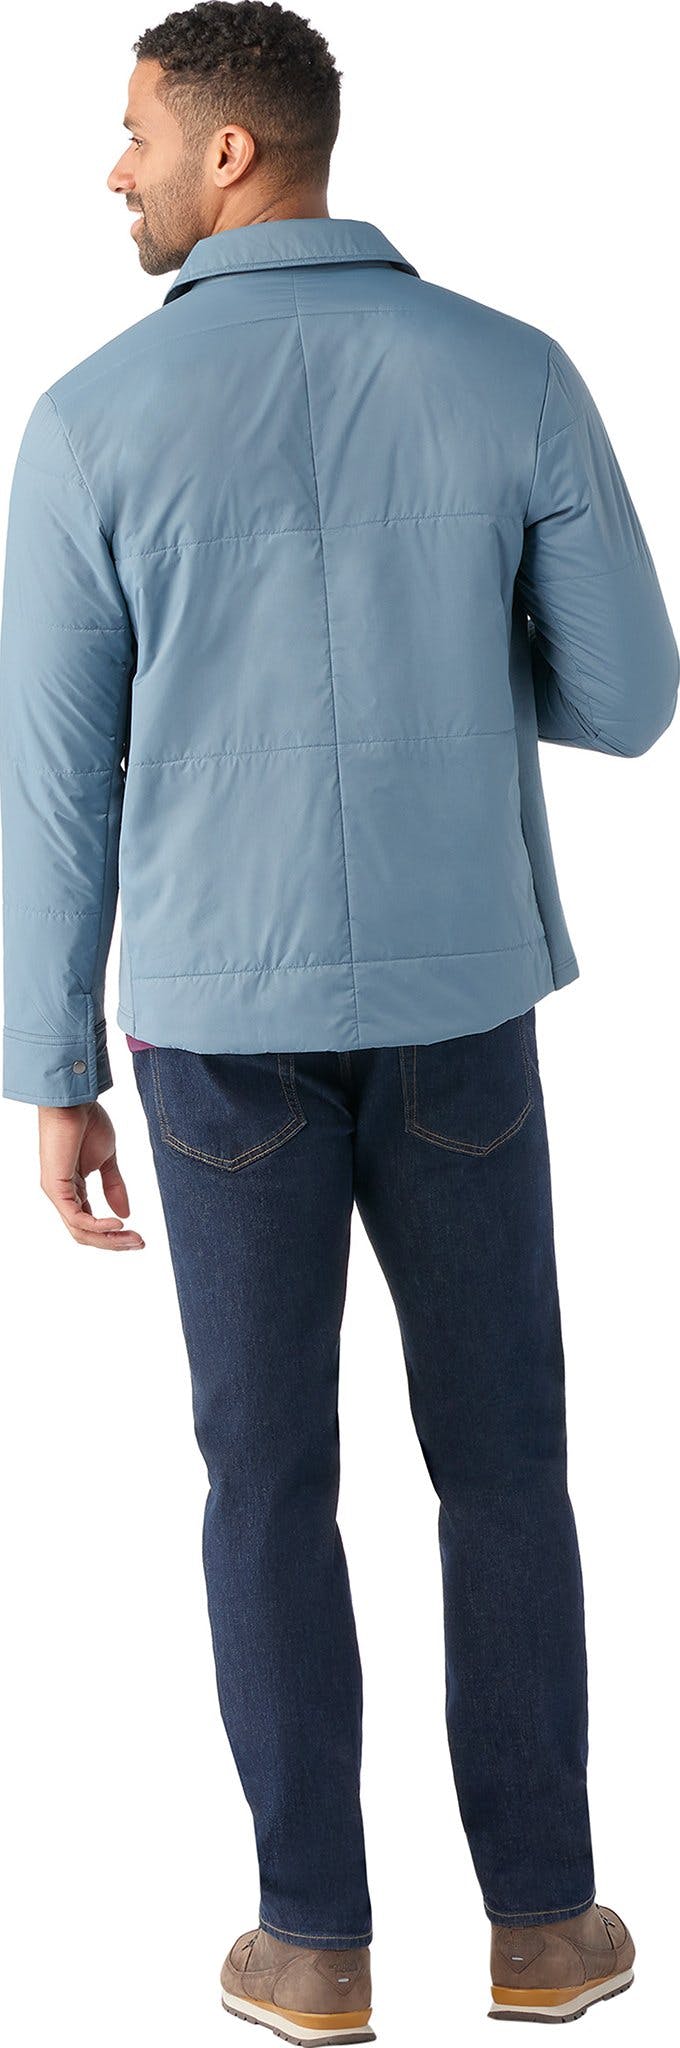 Product gallery image number 2 for product Smartloft Shirt Jacket - Men’s